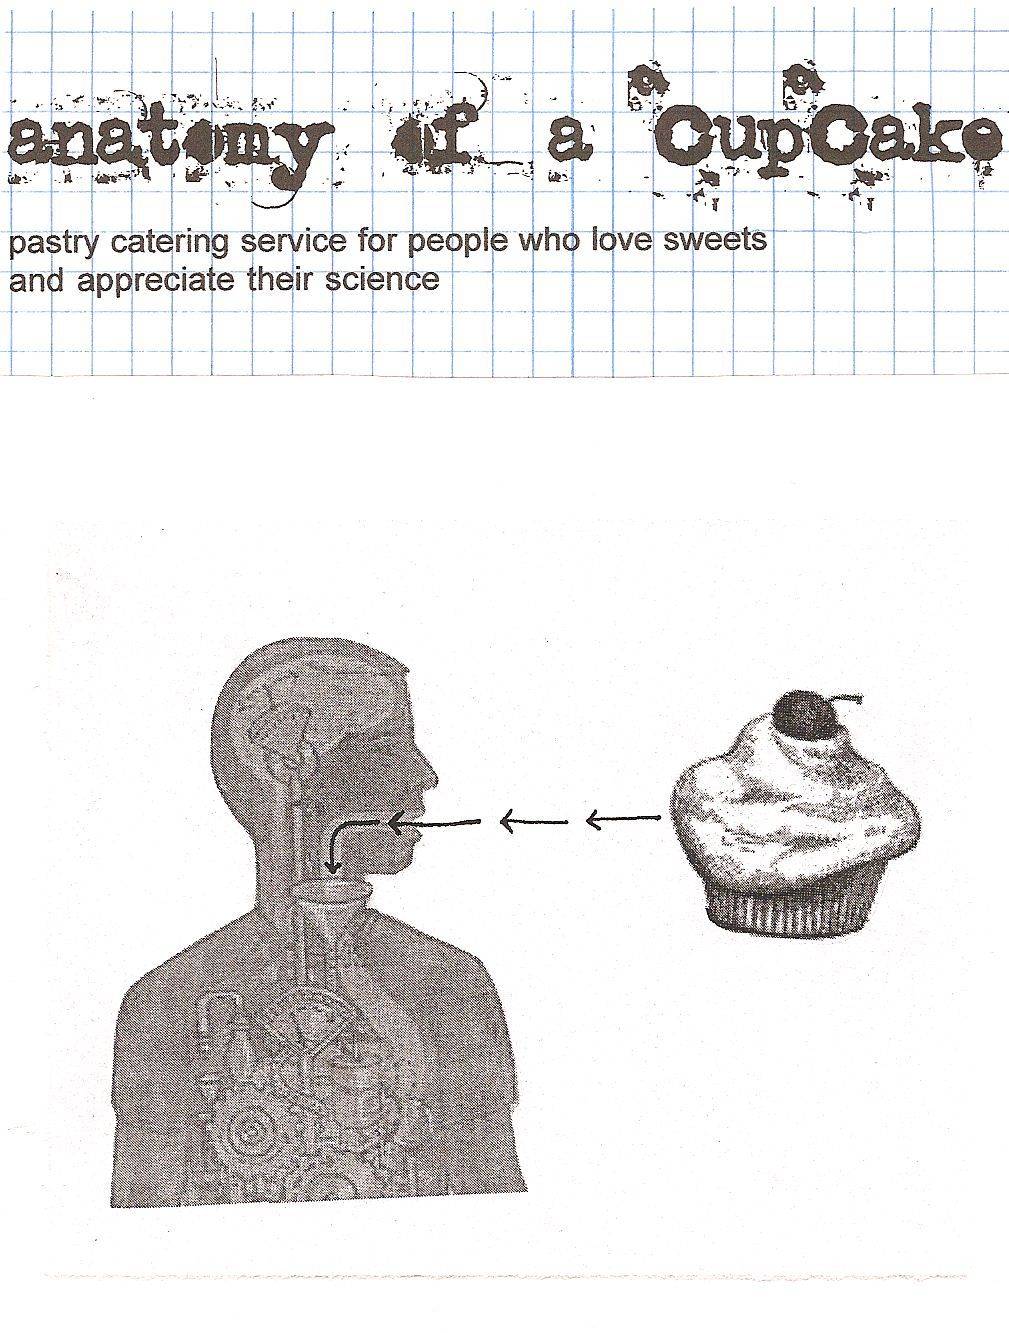 Coming Soon: Anatomy of a Cupcake